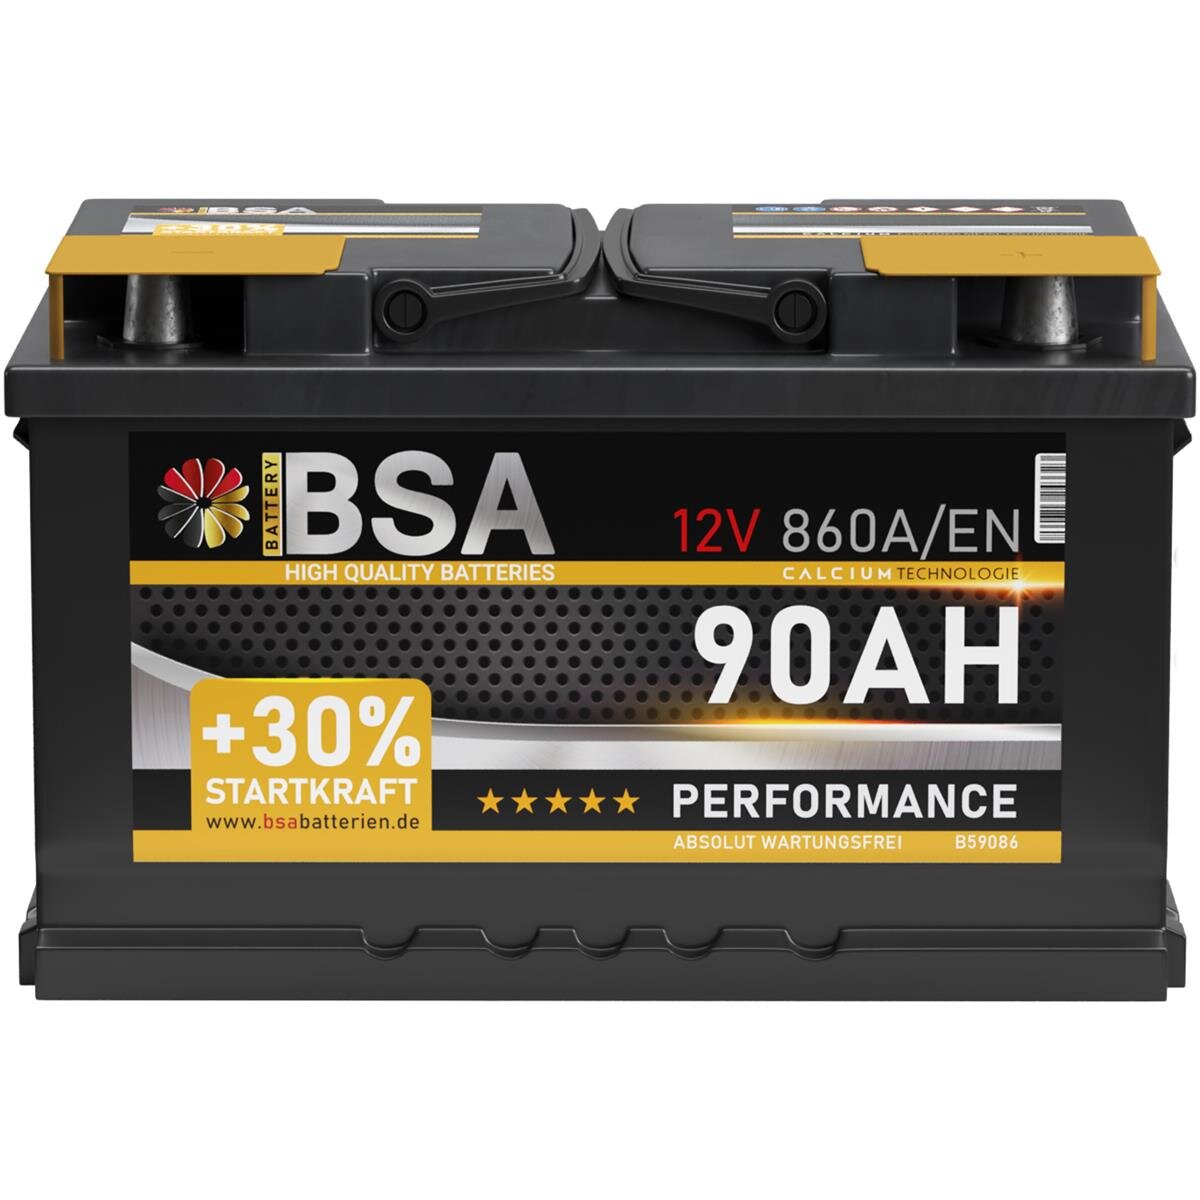 BSA Performance Autobatterie 90Ah 12V, 82,90 €